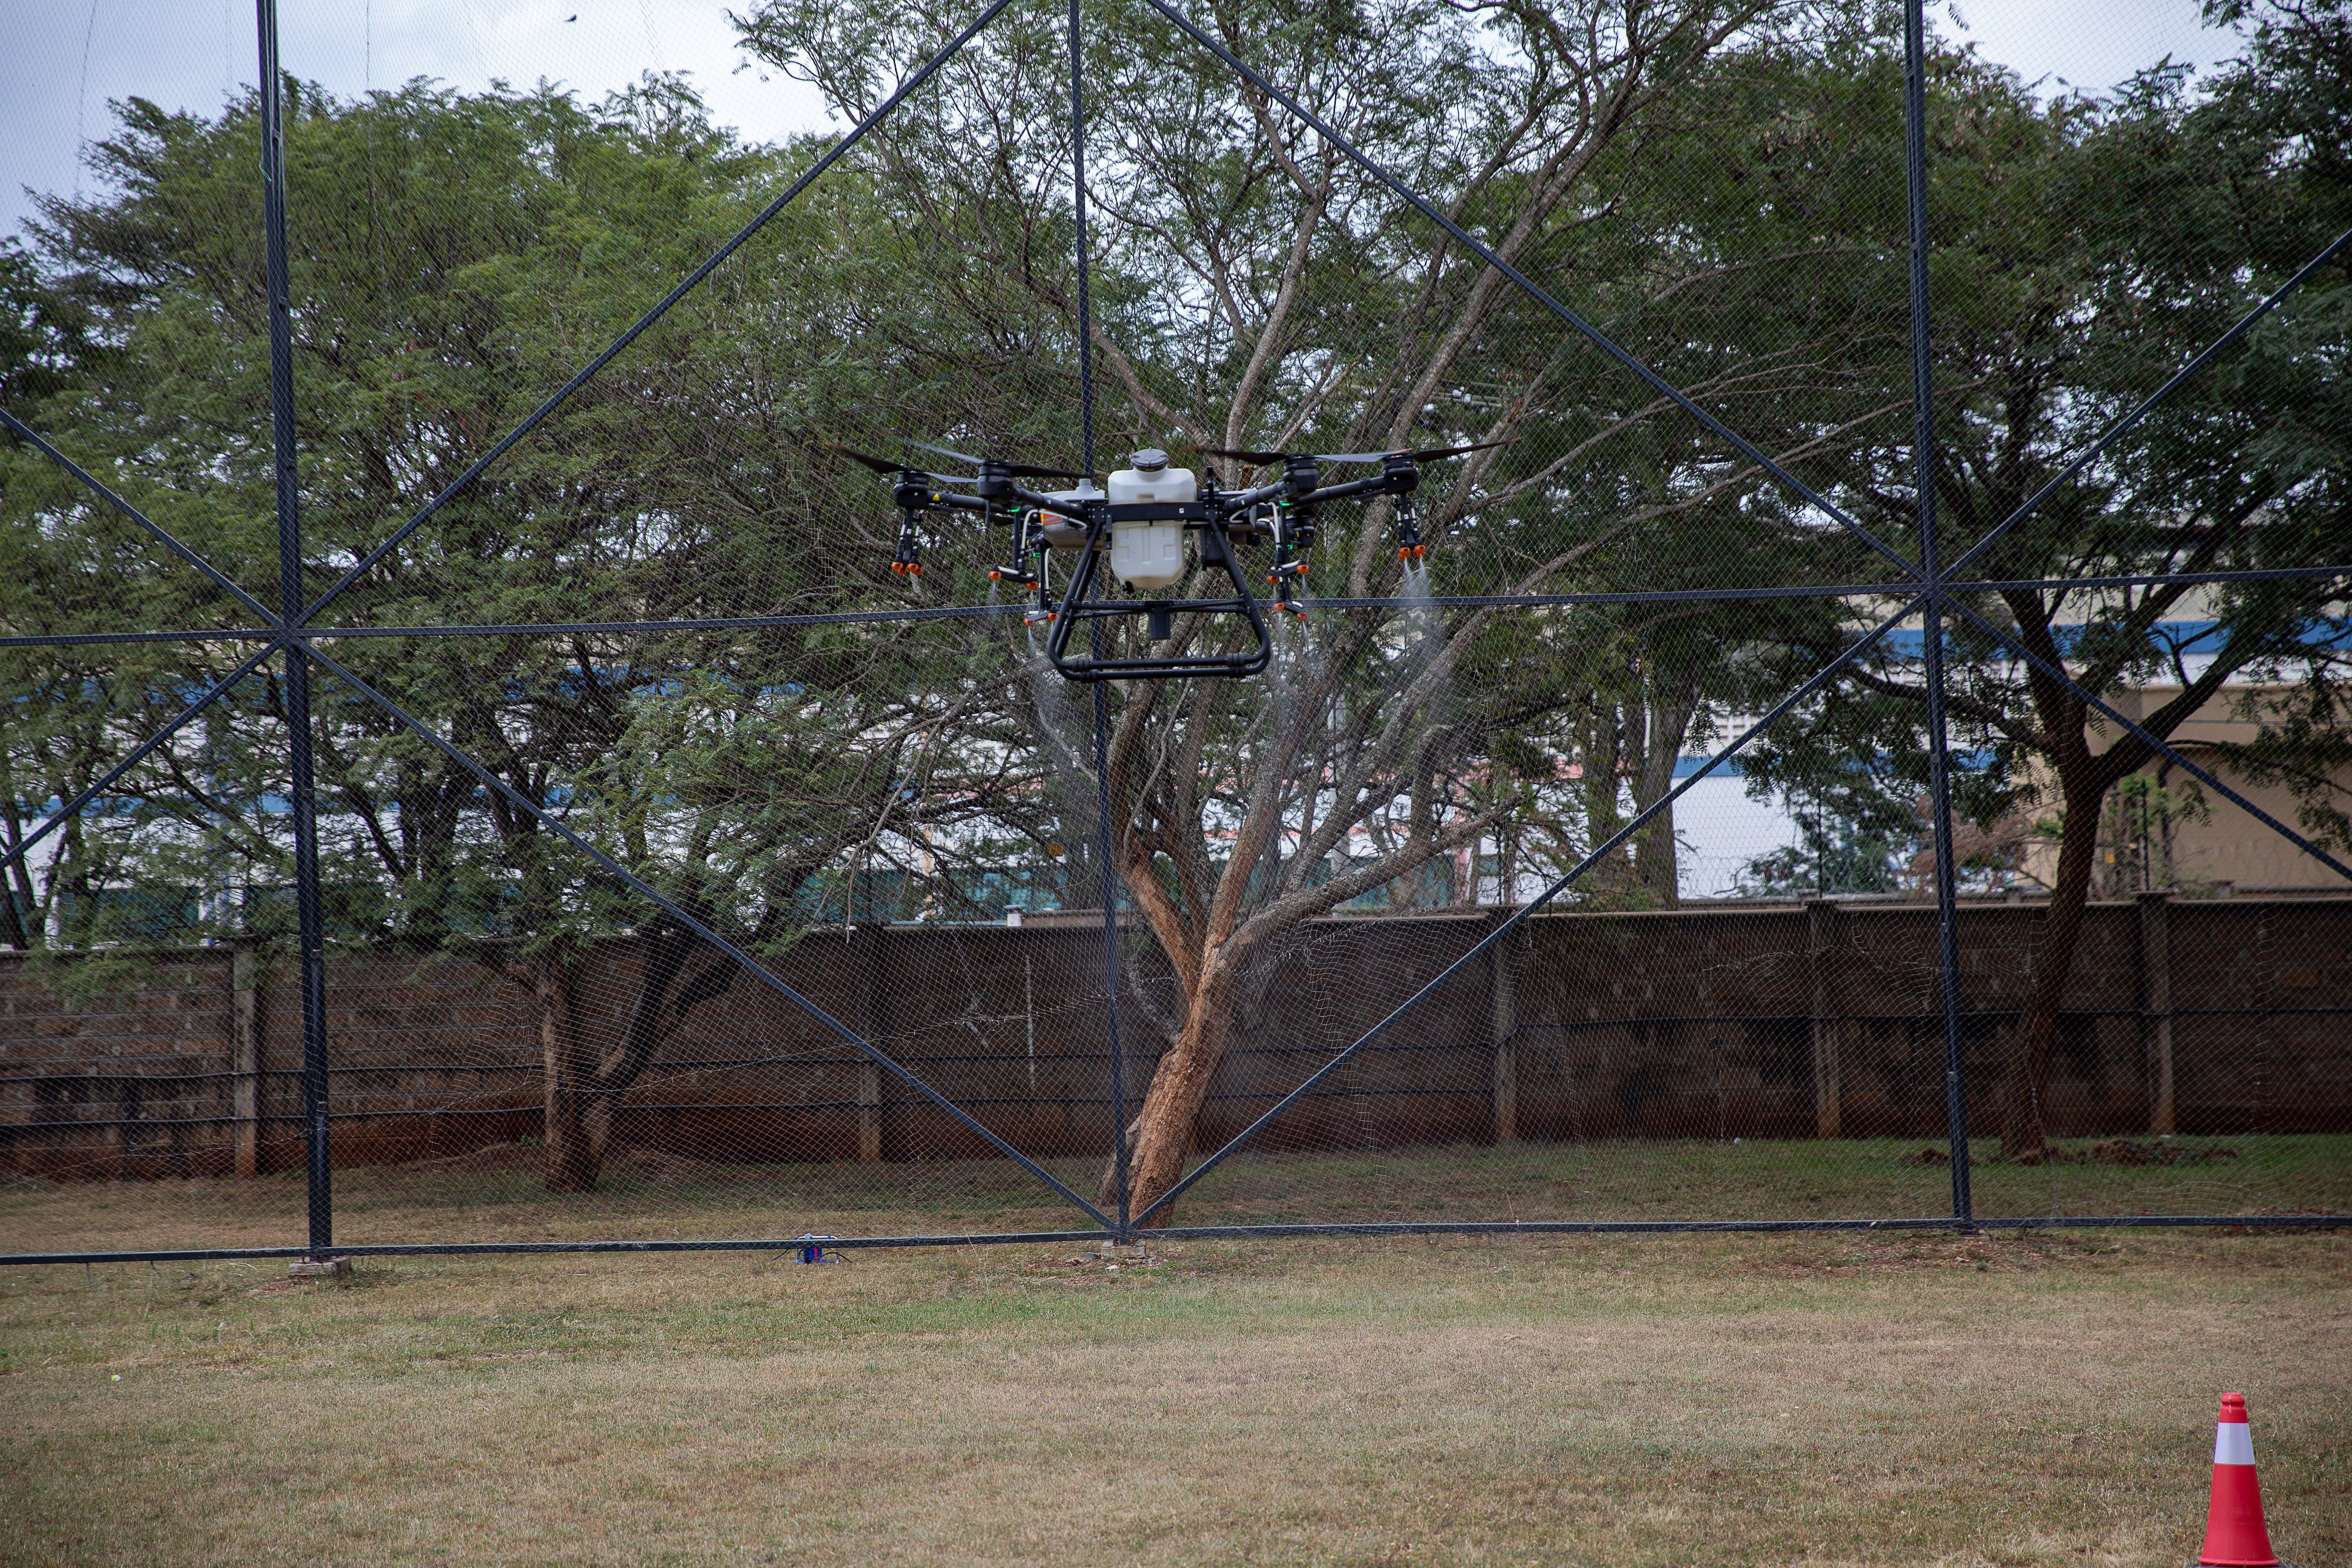 Kenya Airways subsidiary launches drone enclosure facility